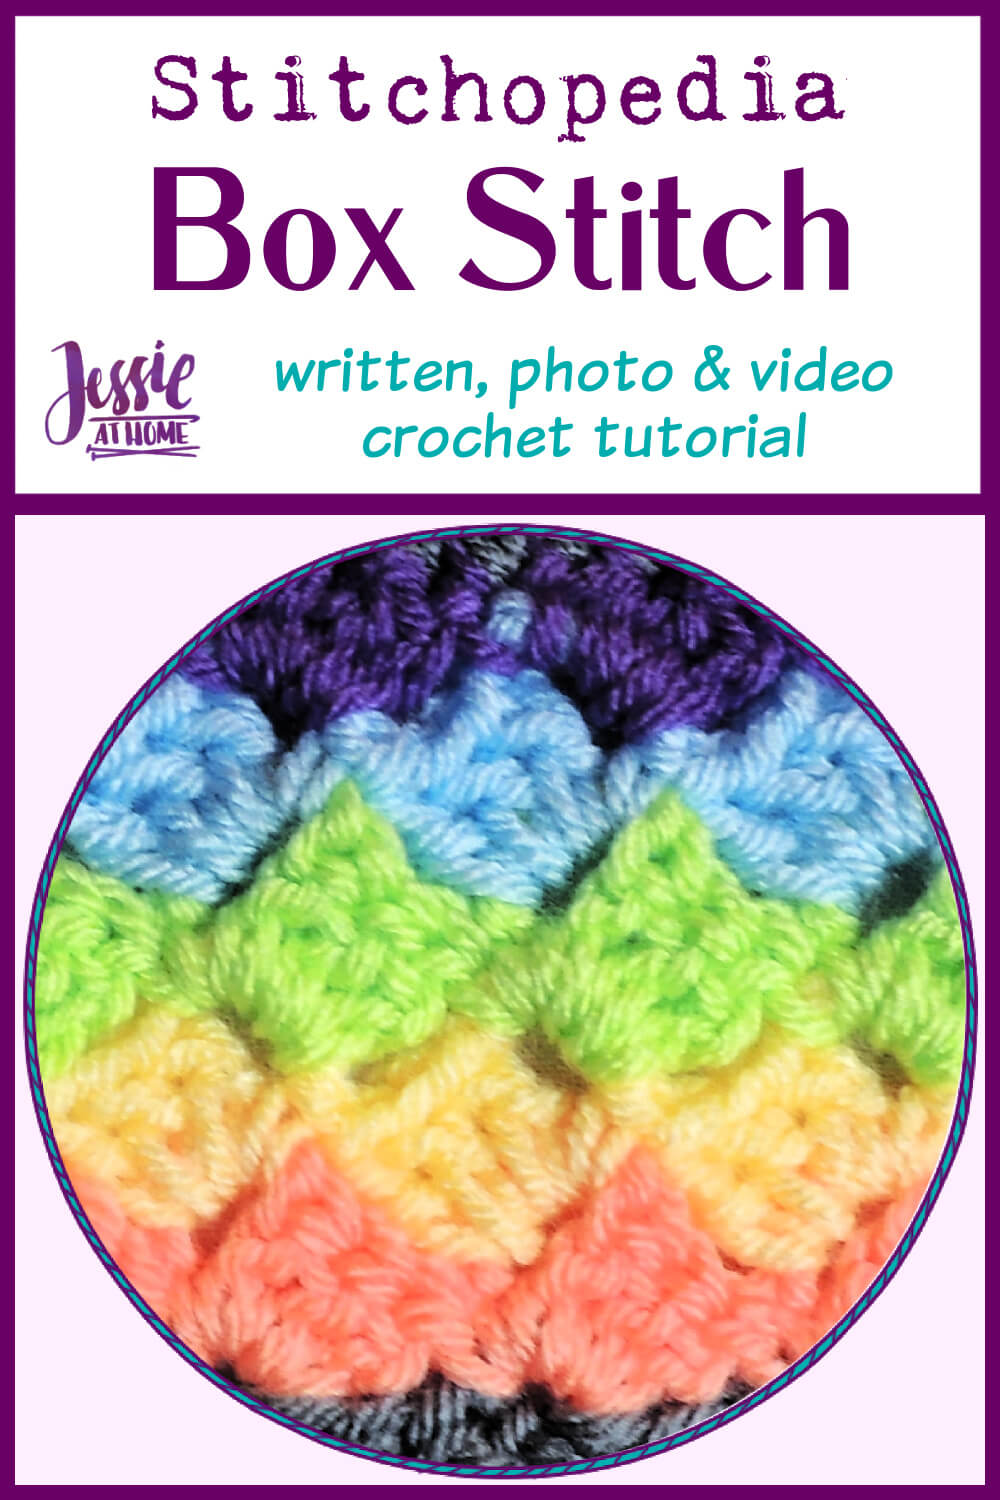 Box Stitch – written, photo, and video crochet tutorial